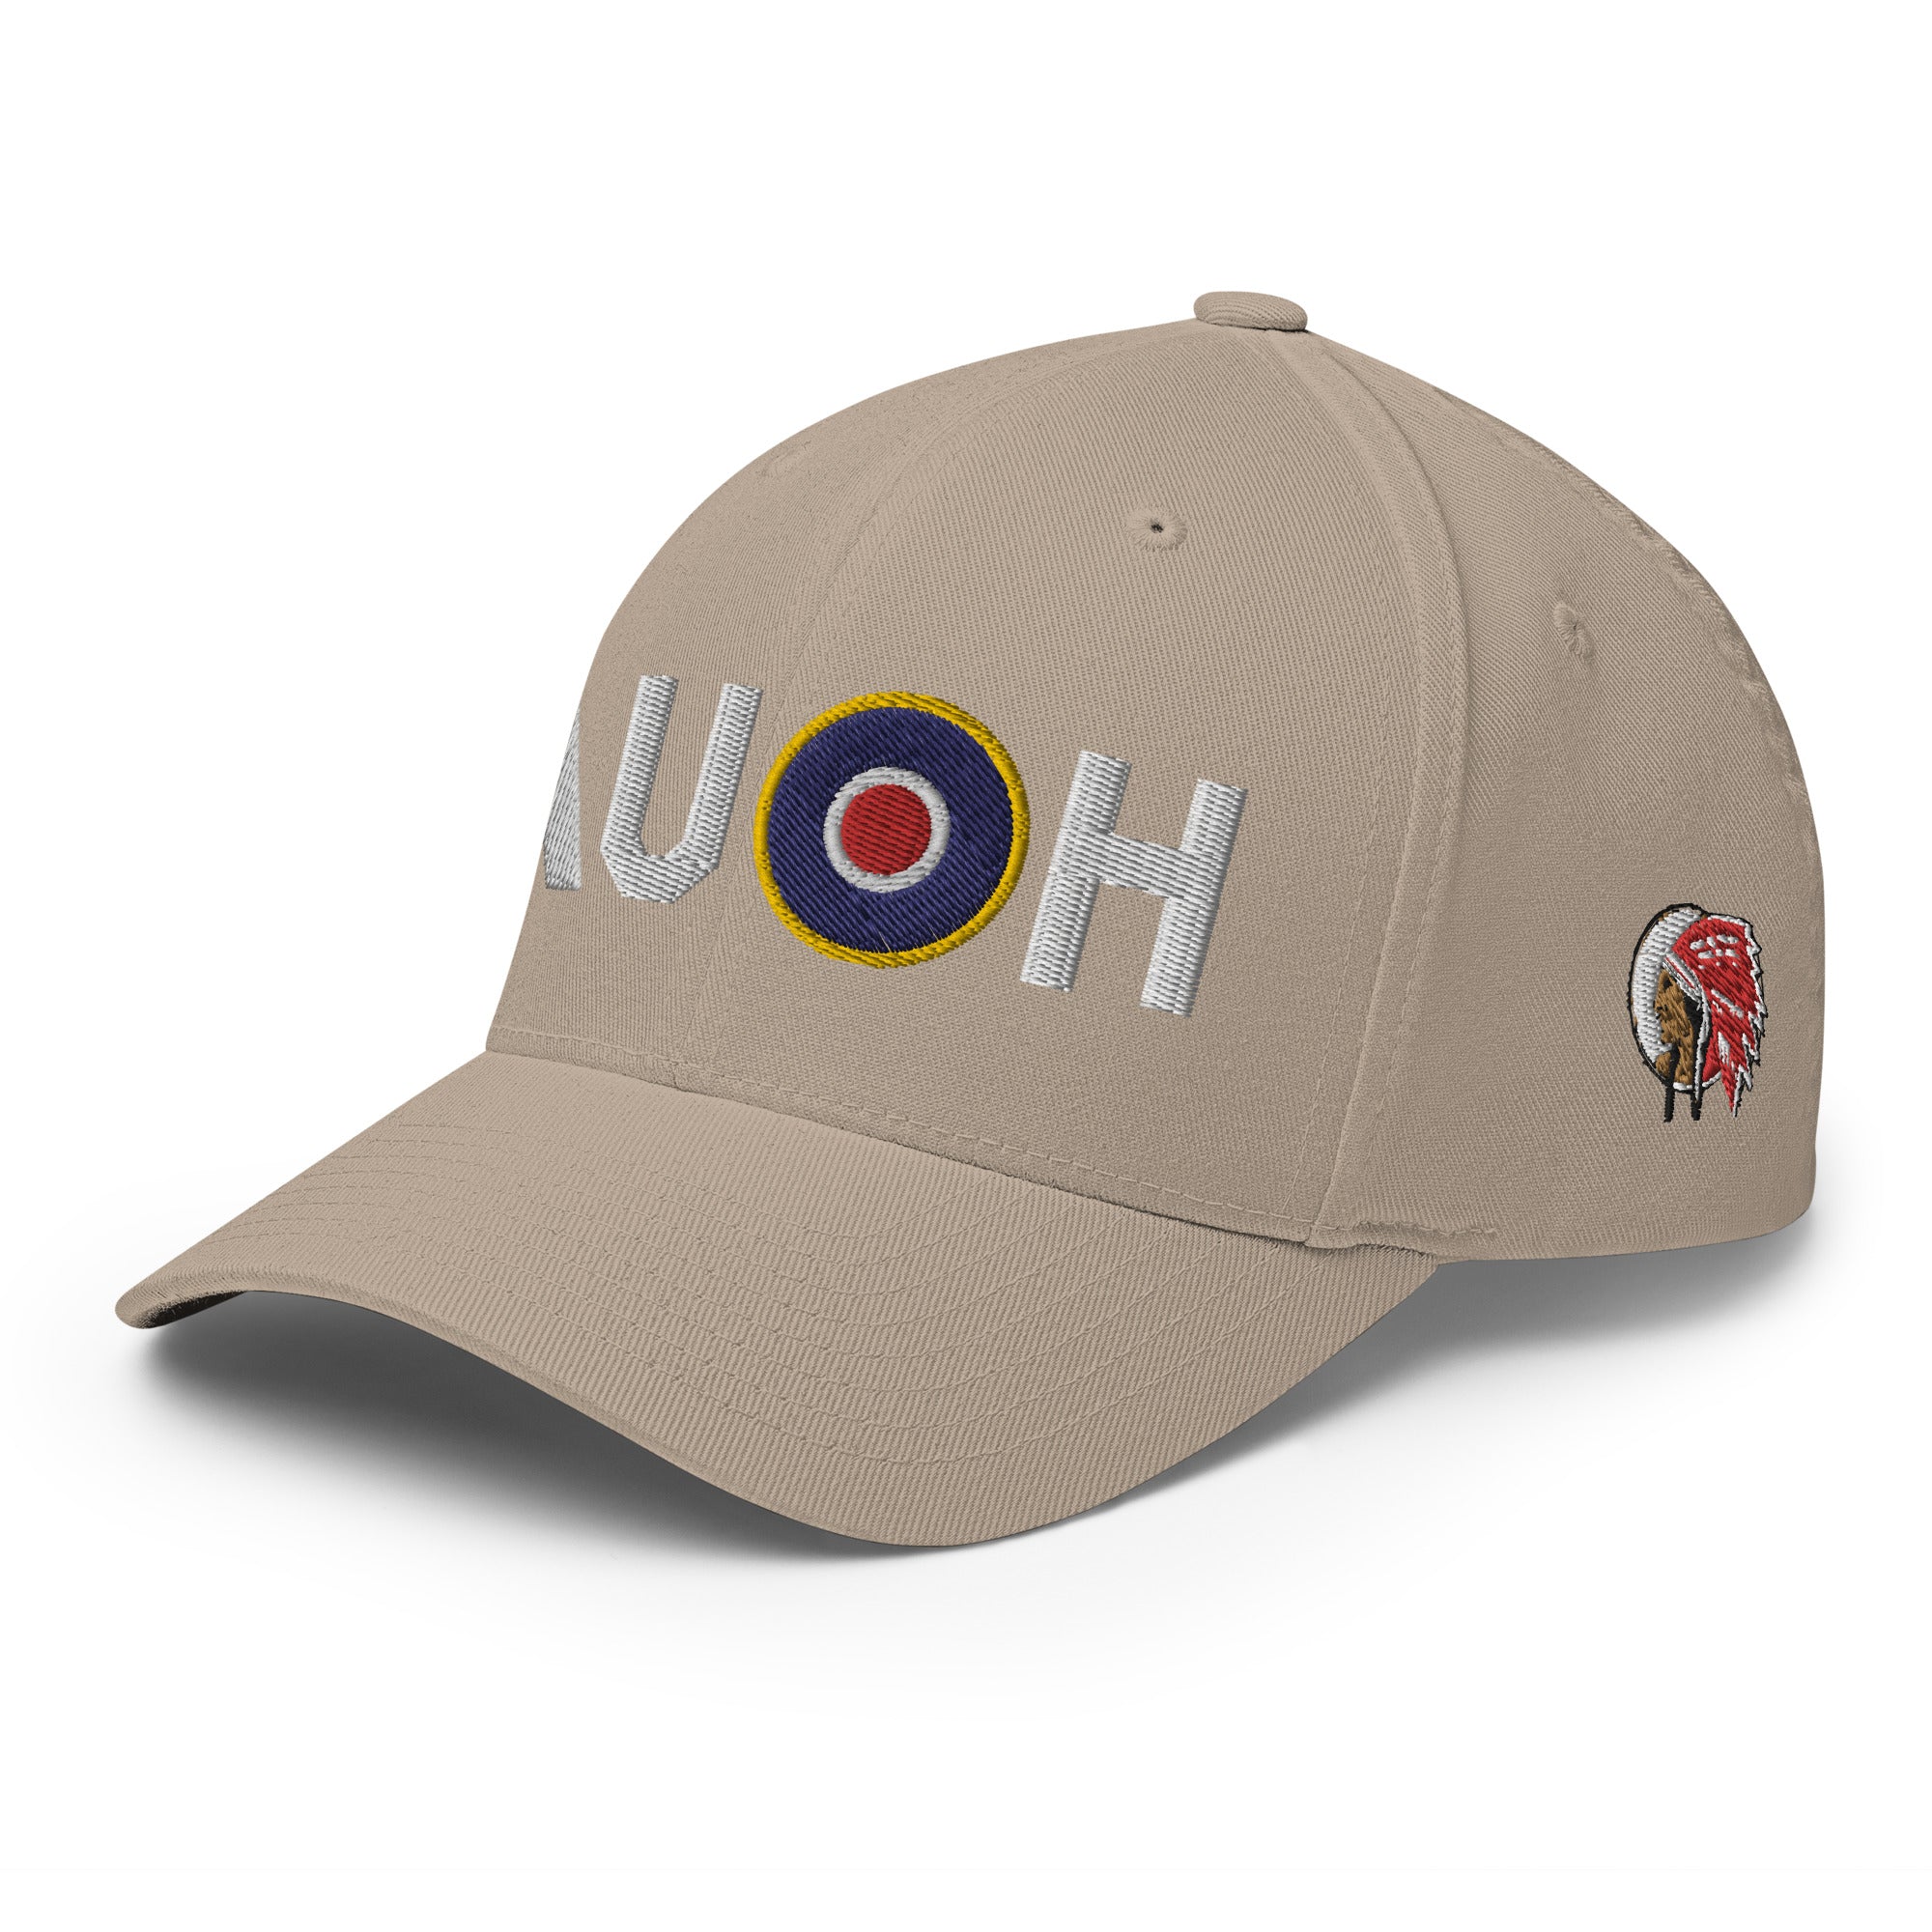 Spitfire "HU-A" Structured Twill Cap - I Love a Hangar